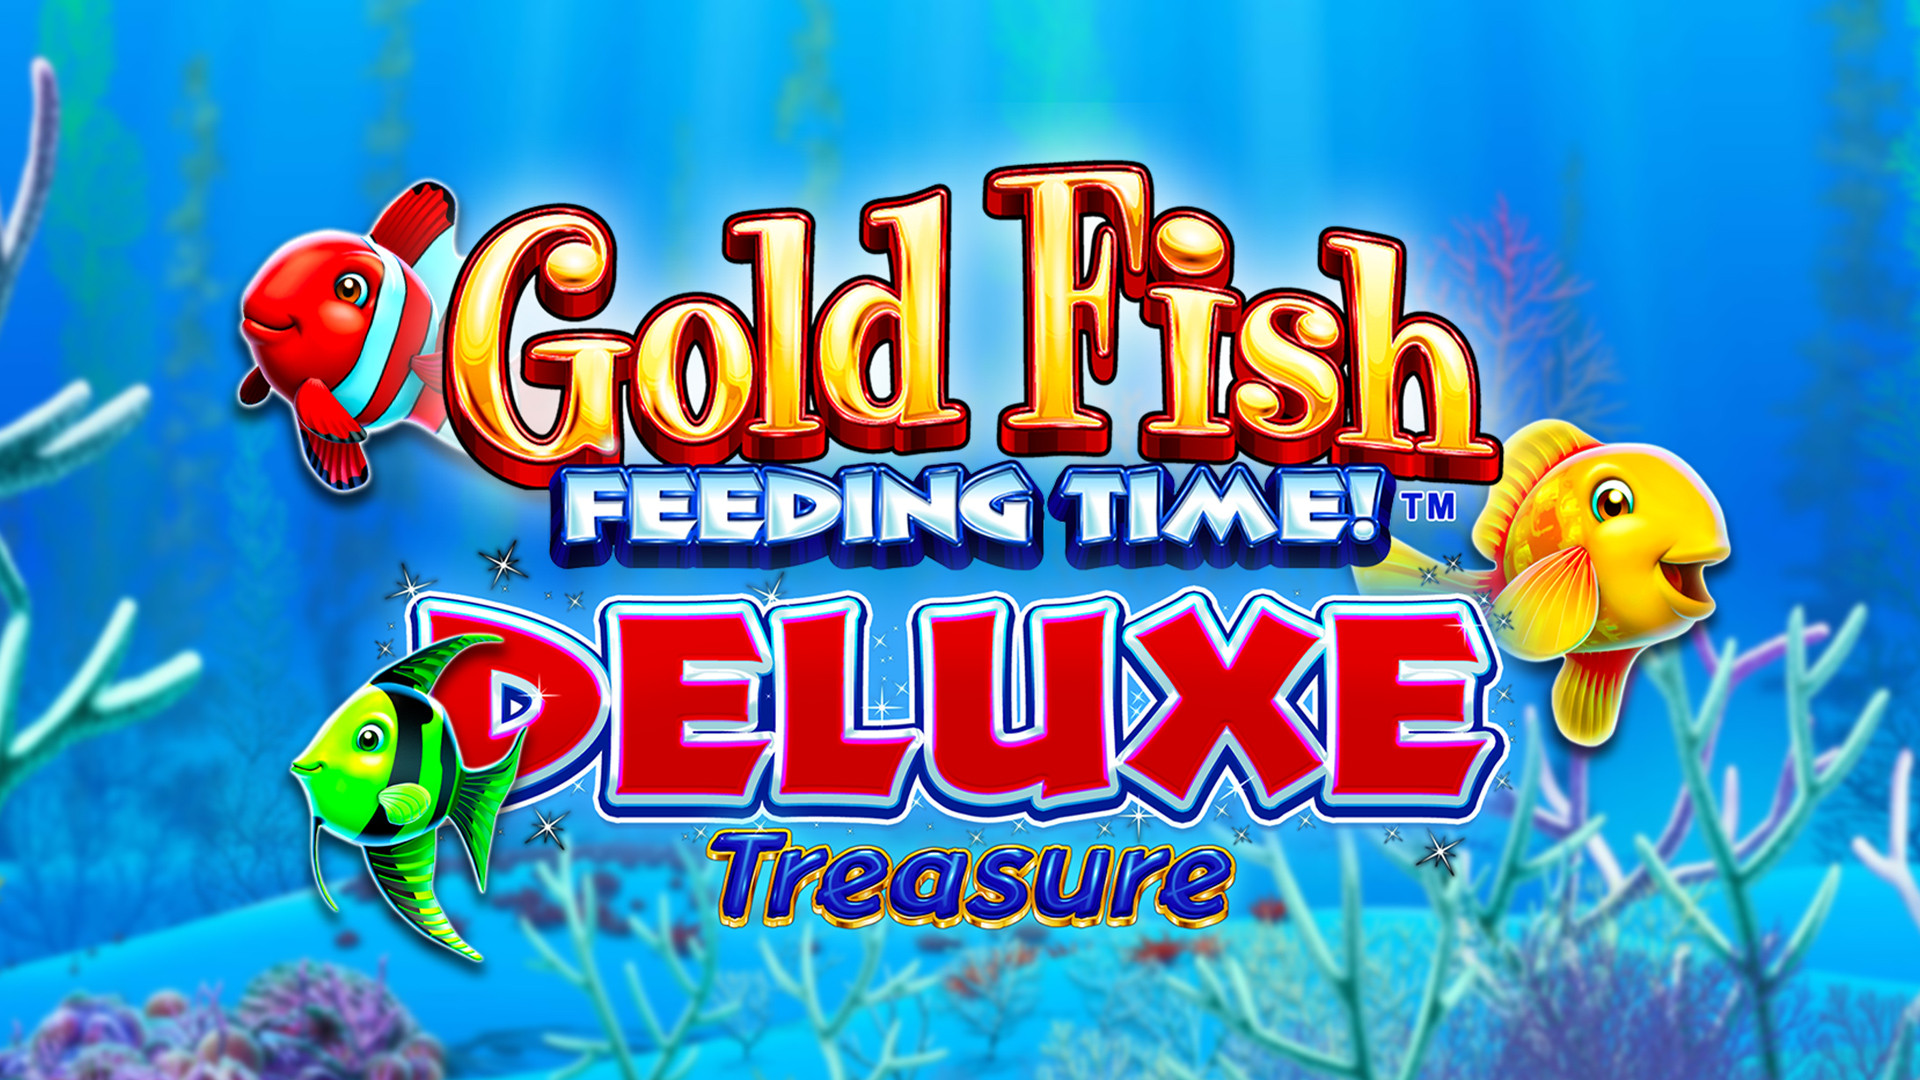 Gold Fish Feeding Time! Deluxe Treasure